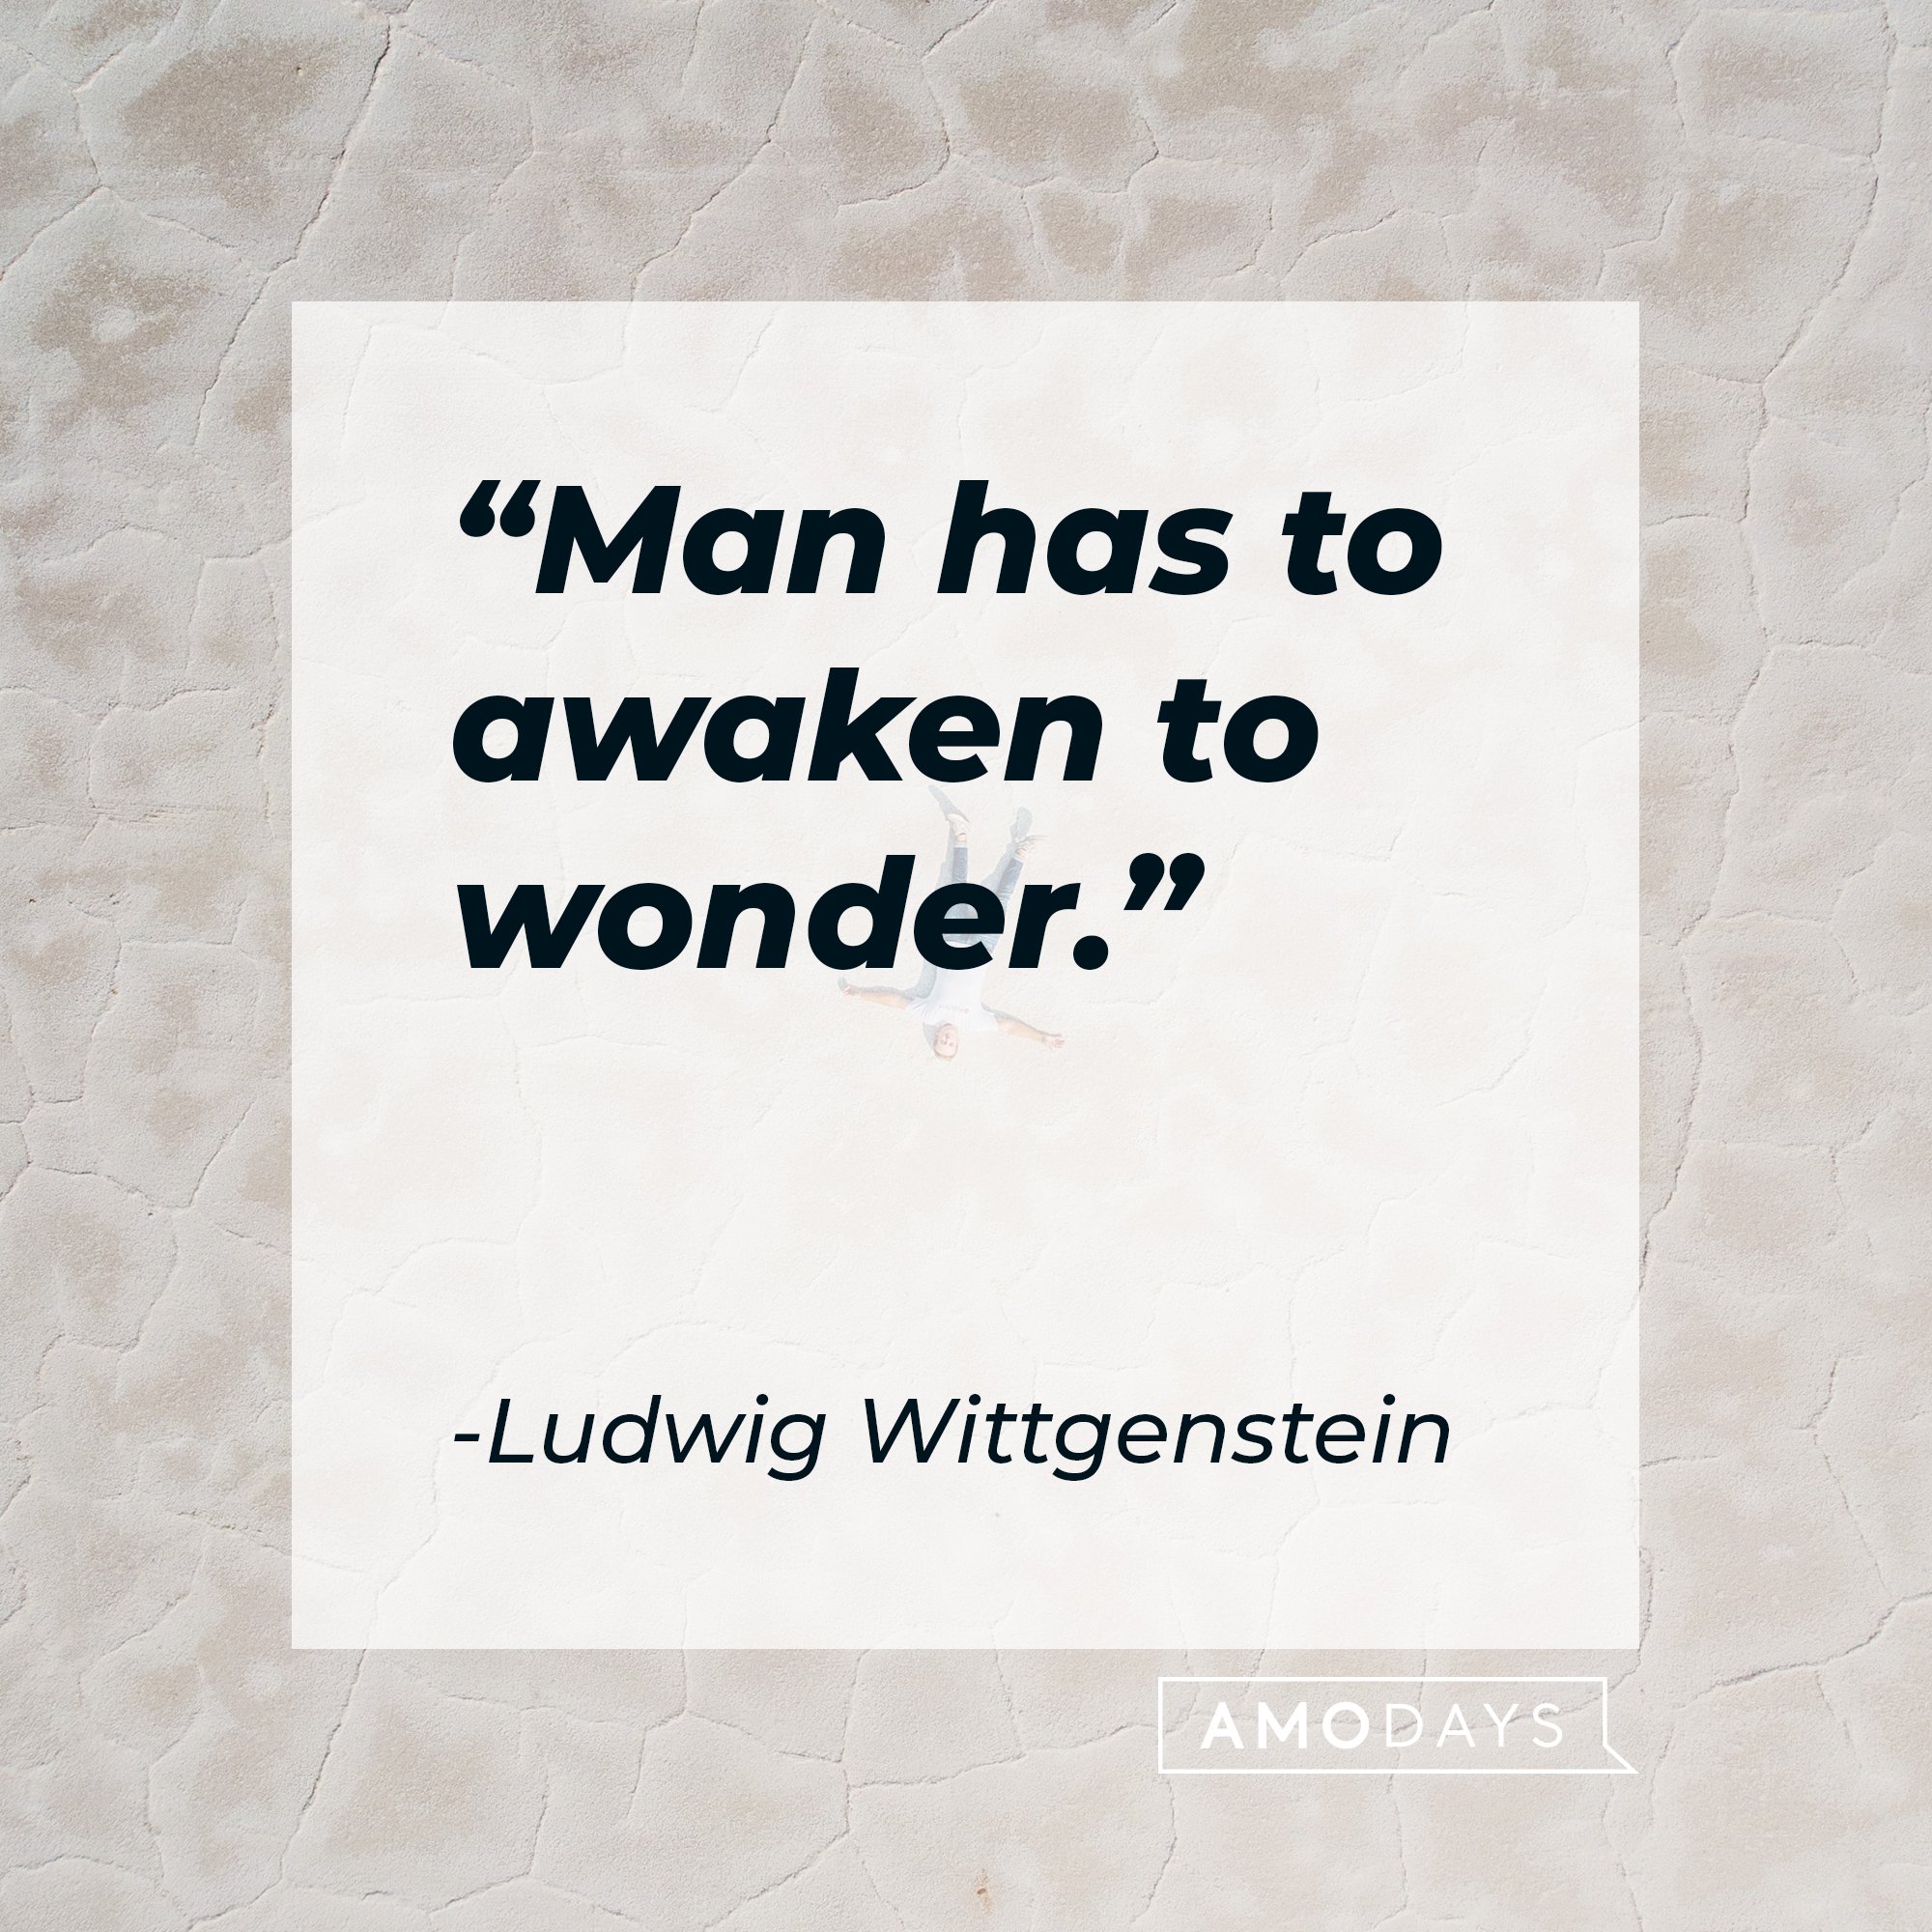 Ludwig Wittgenstein’s quote: "Man has to awaken to wonder." | Image: AmoDays